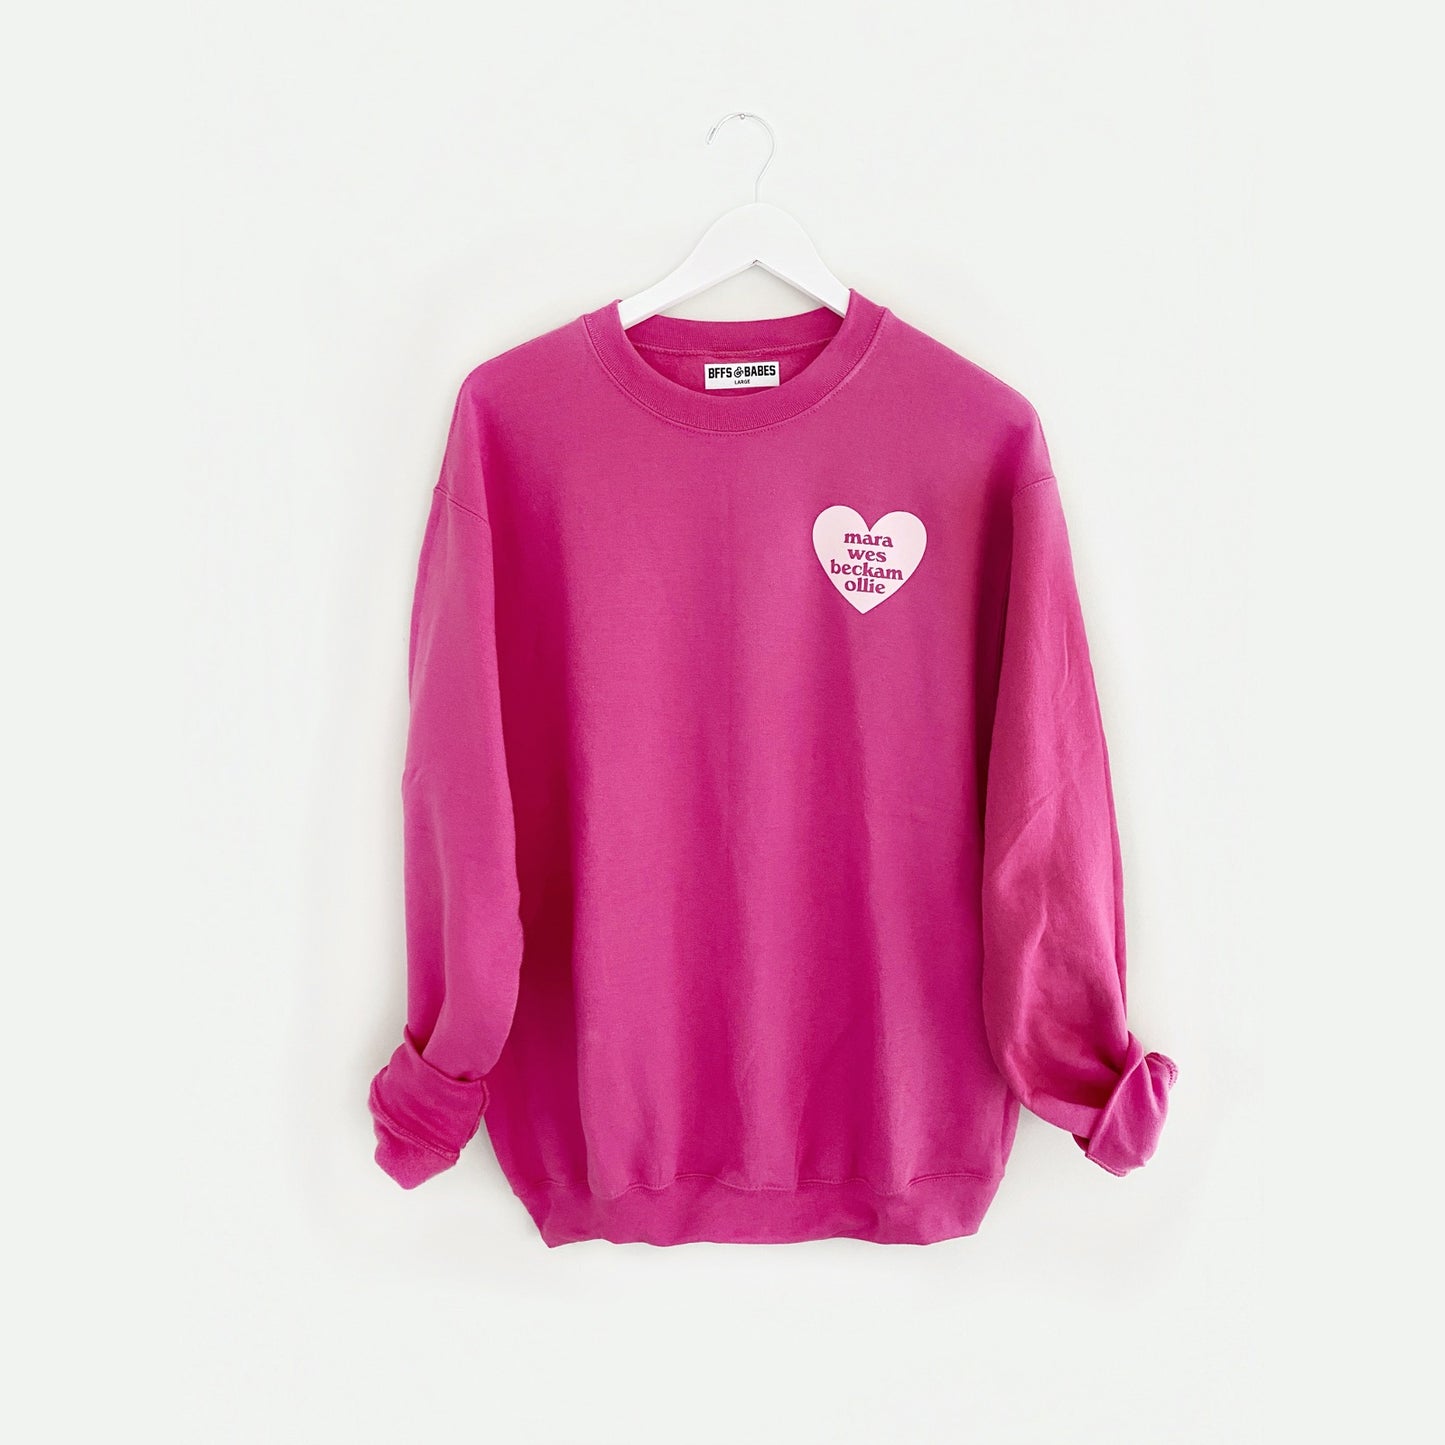 HEART U MOST 2.0 ♡ pink punch adult sweatshirt